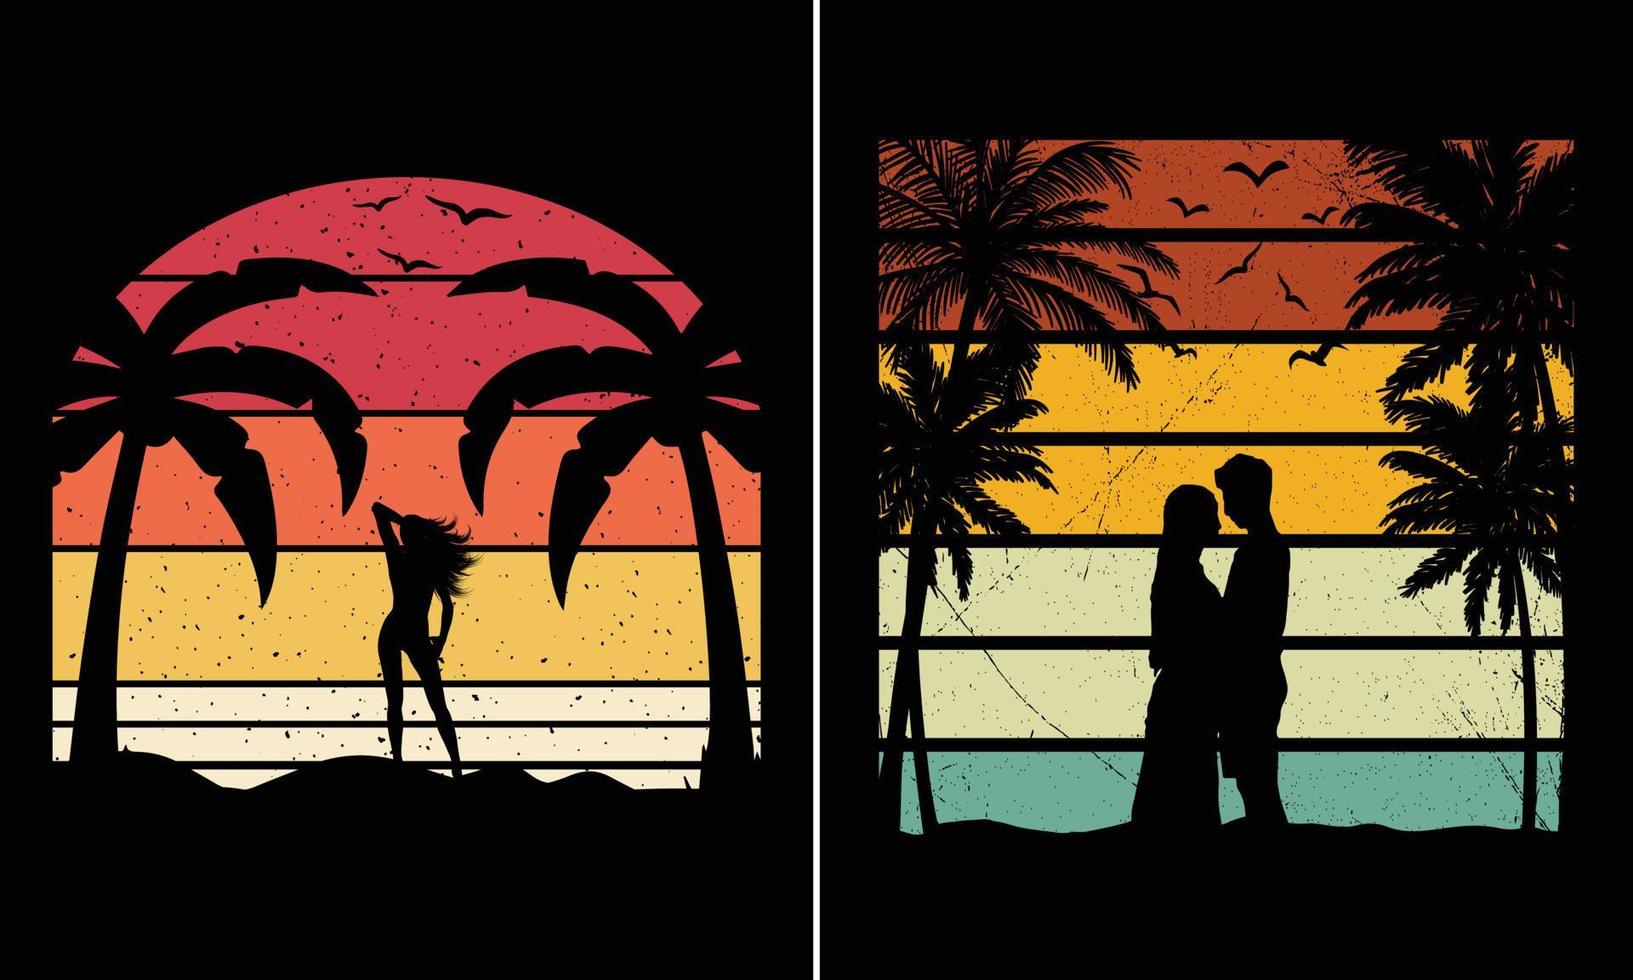 retro wijnoogst zonsondergang zomer t-shirt grafisch voor peul plaatsen, zomer strand t-shirt ontwerpen vector